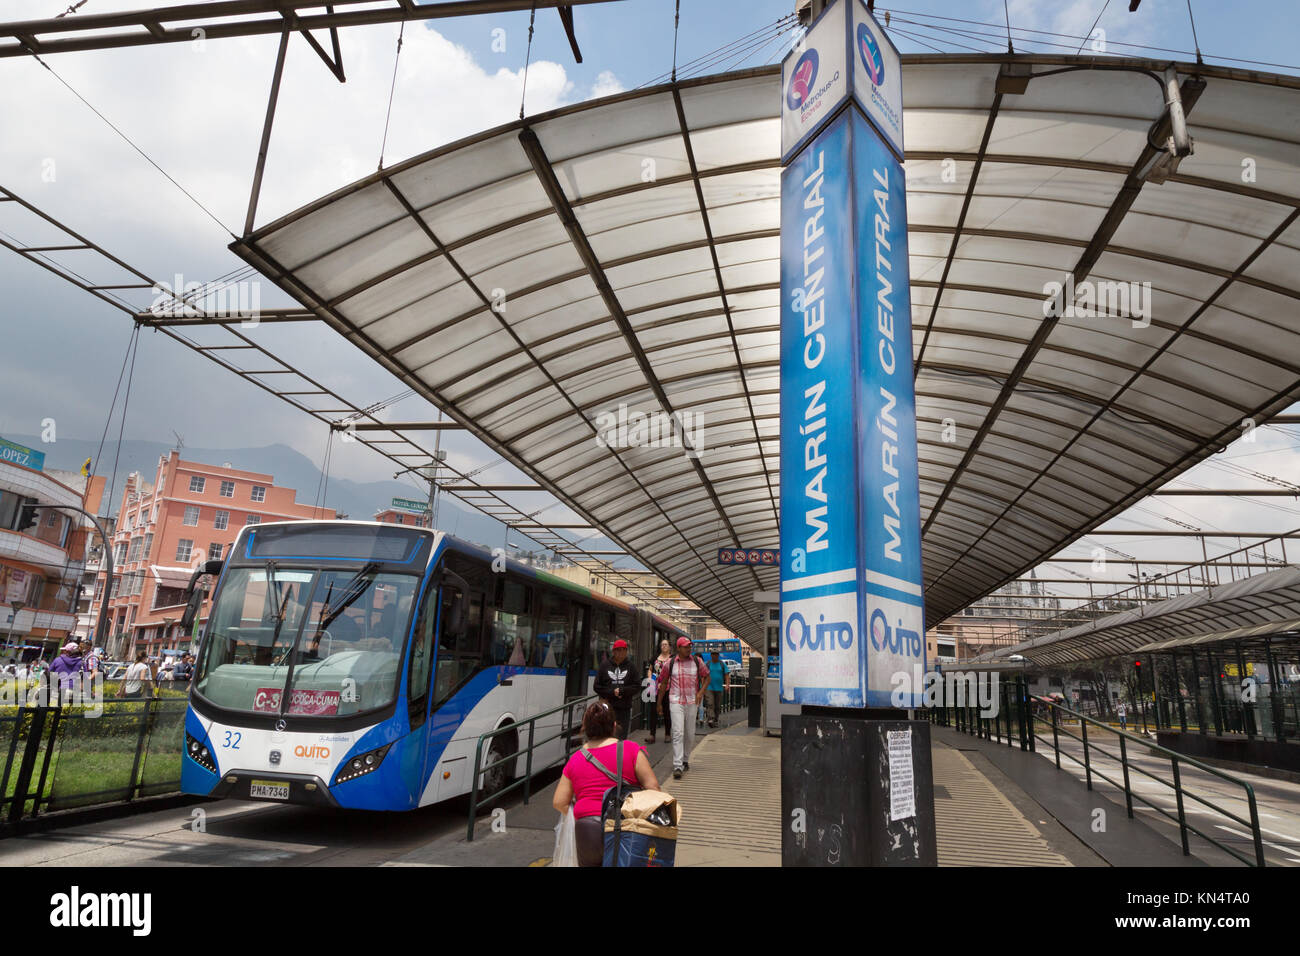 Quito Marin Central bus terminus or bus station, Quito Ecuador South America Stock Photo